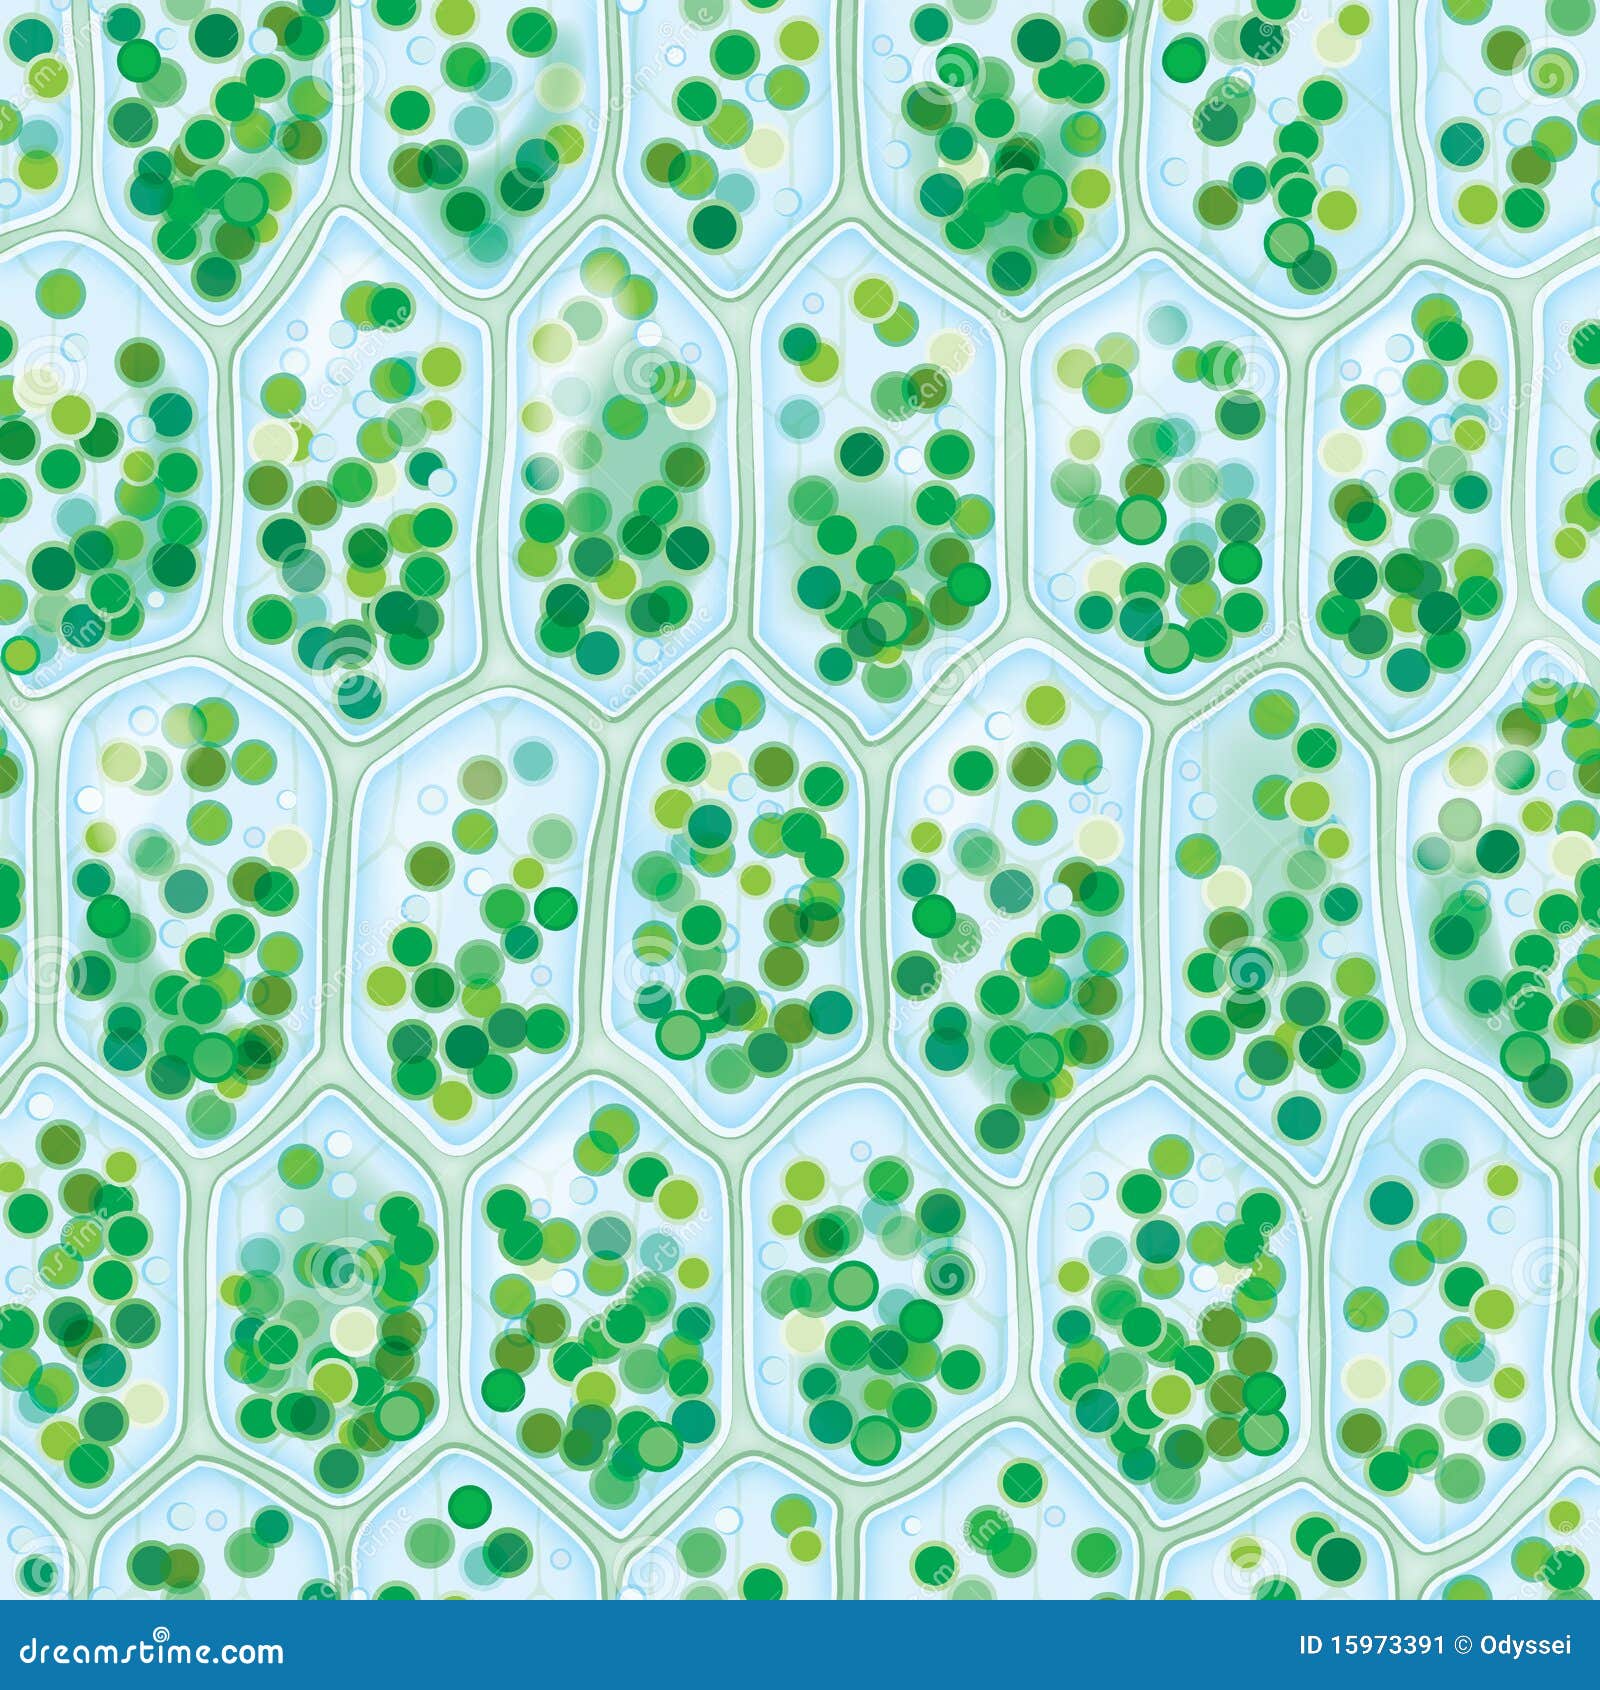 chlorophyll cells seamless pattern